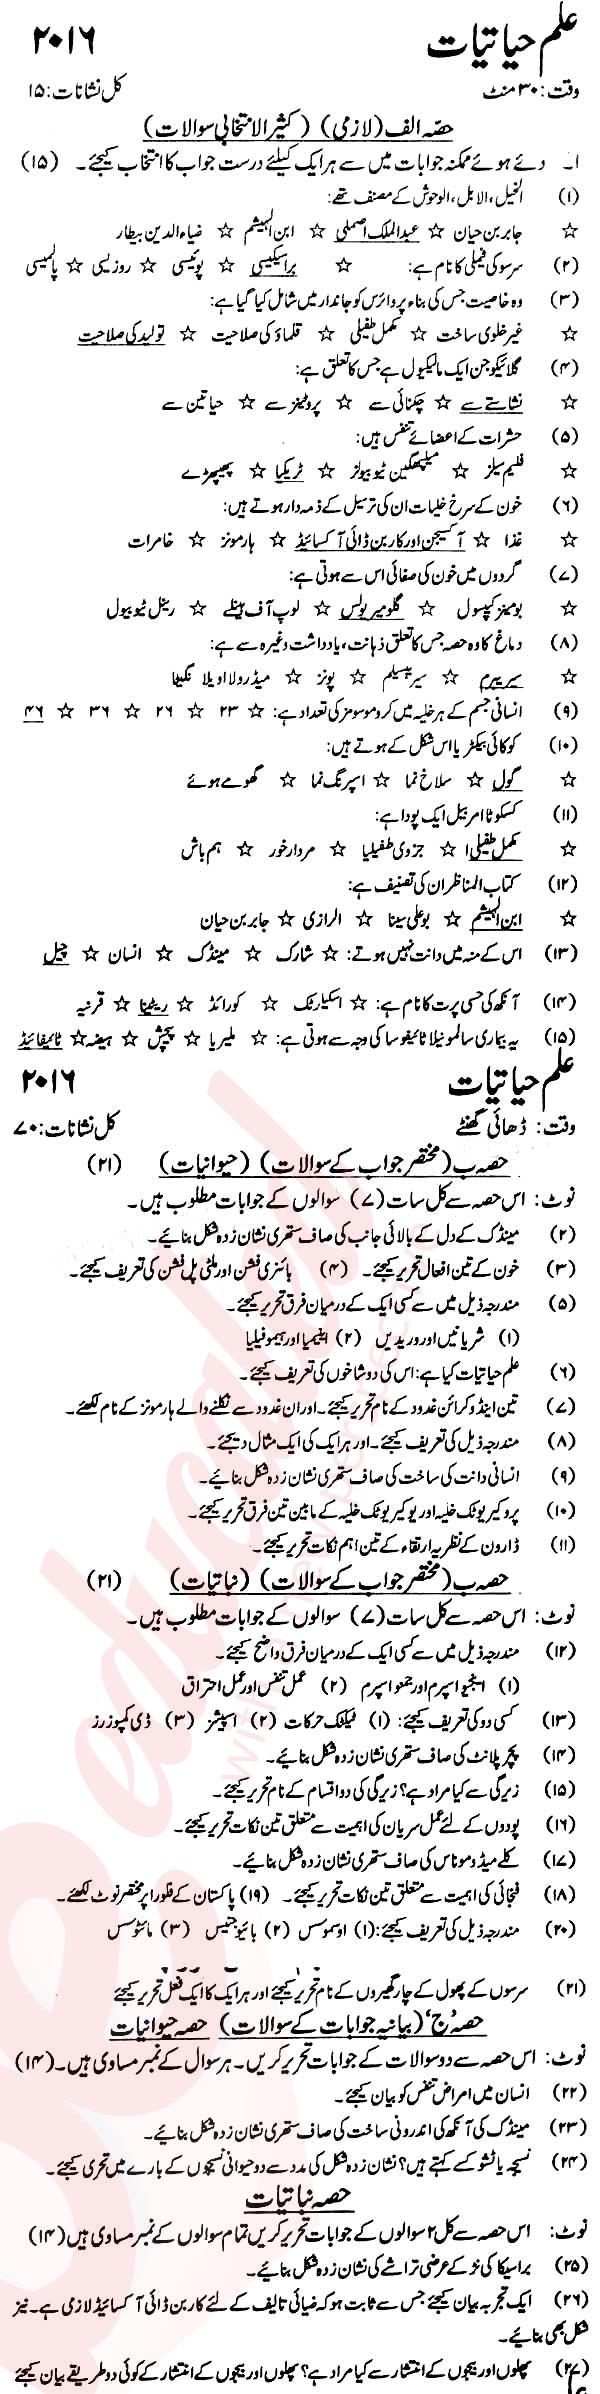 Biology 9th Urdu Medium Past Paper Group 1 KPBTE 2016